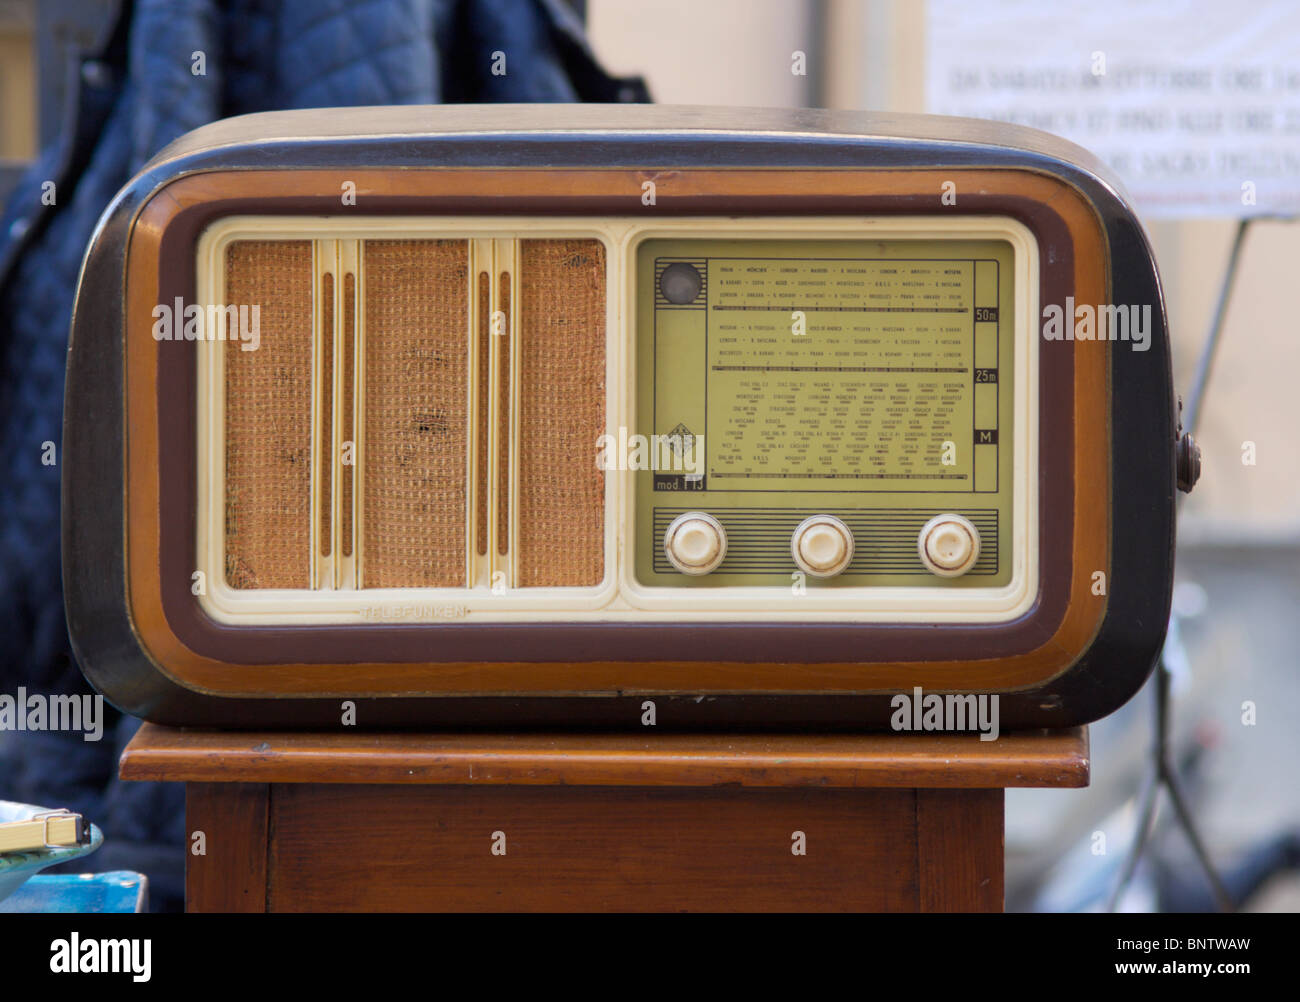 Vintage Telefunken radio Stock Photo - Alamy